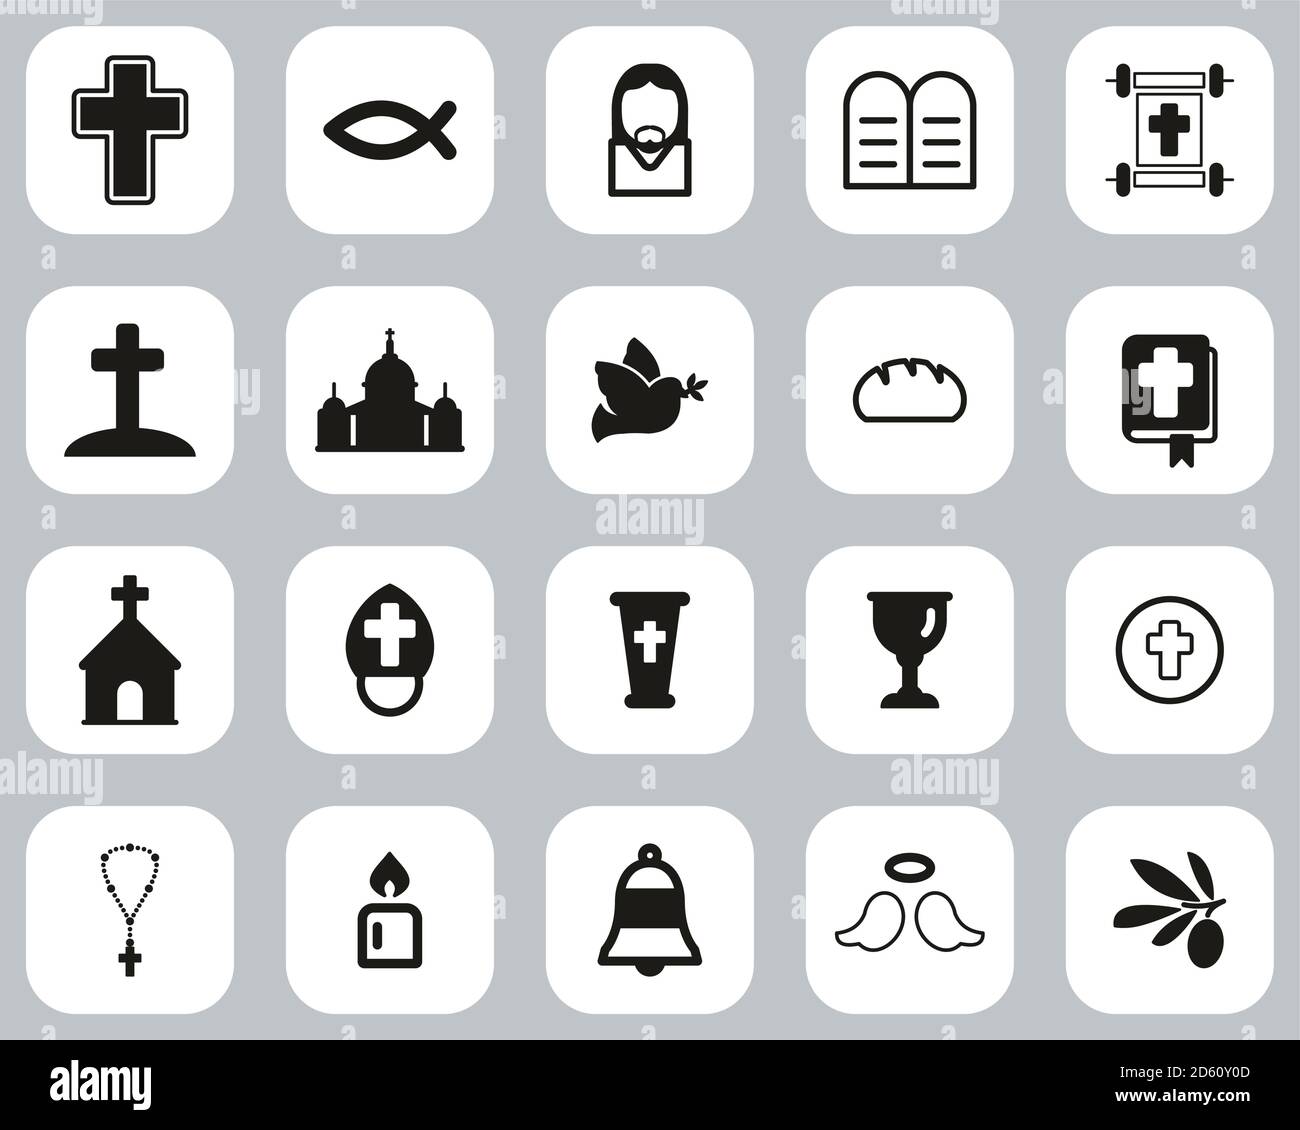 Christianity Religion & Religious Items Icons Black & White Flat Design Set Big Stock Vector